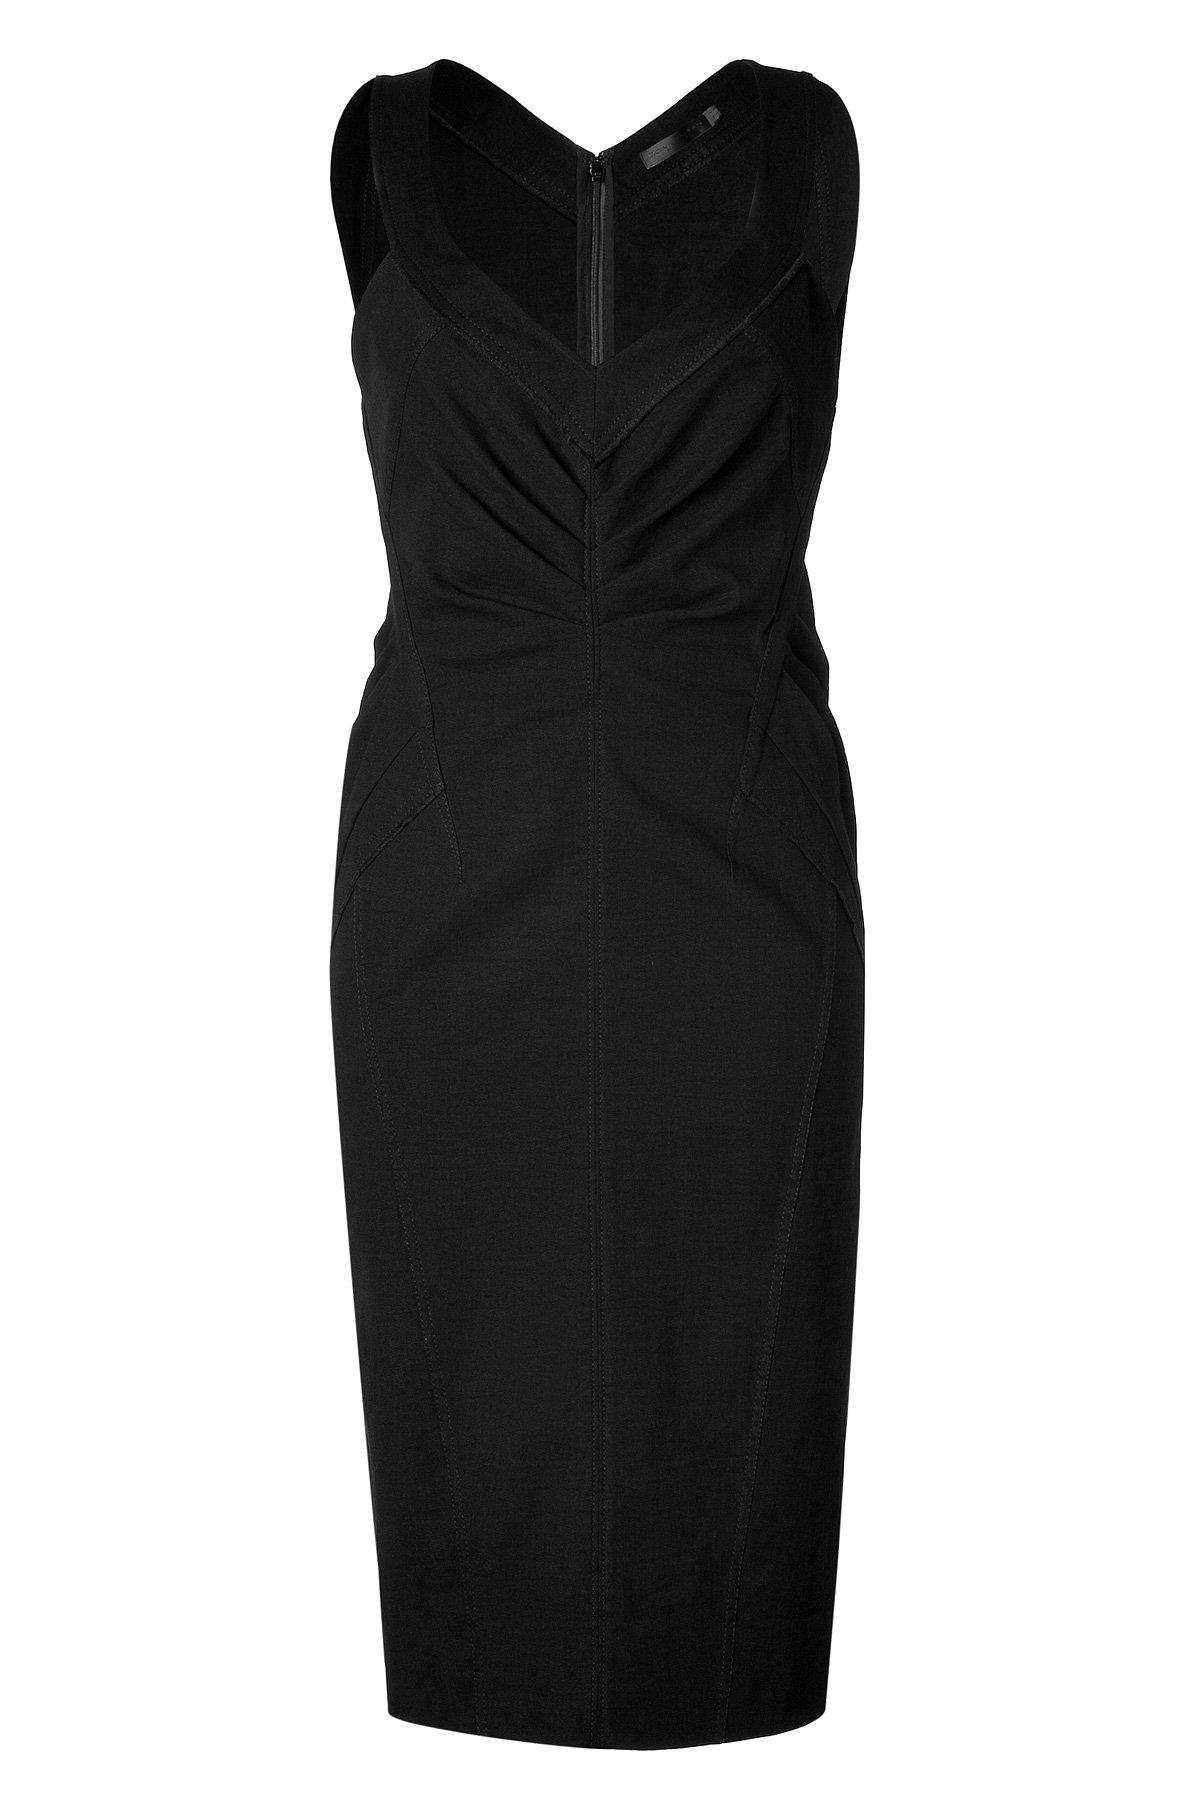 Donna Karan Leather Black Side Pleated Dress - Lyst